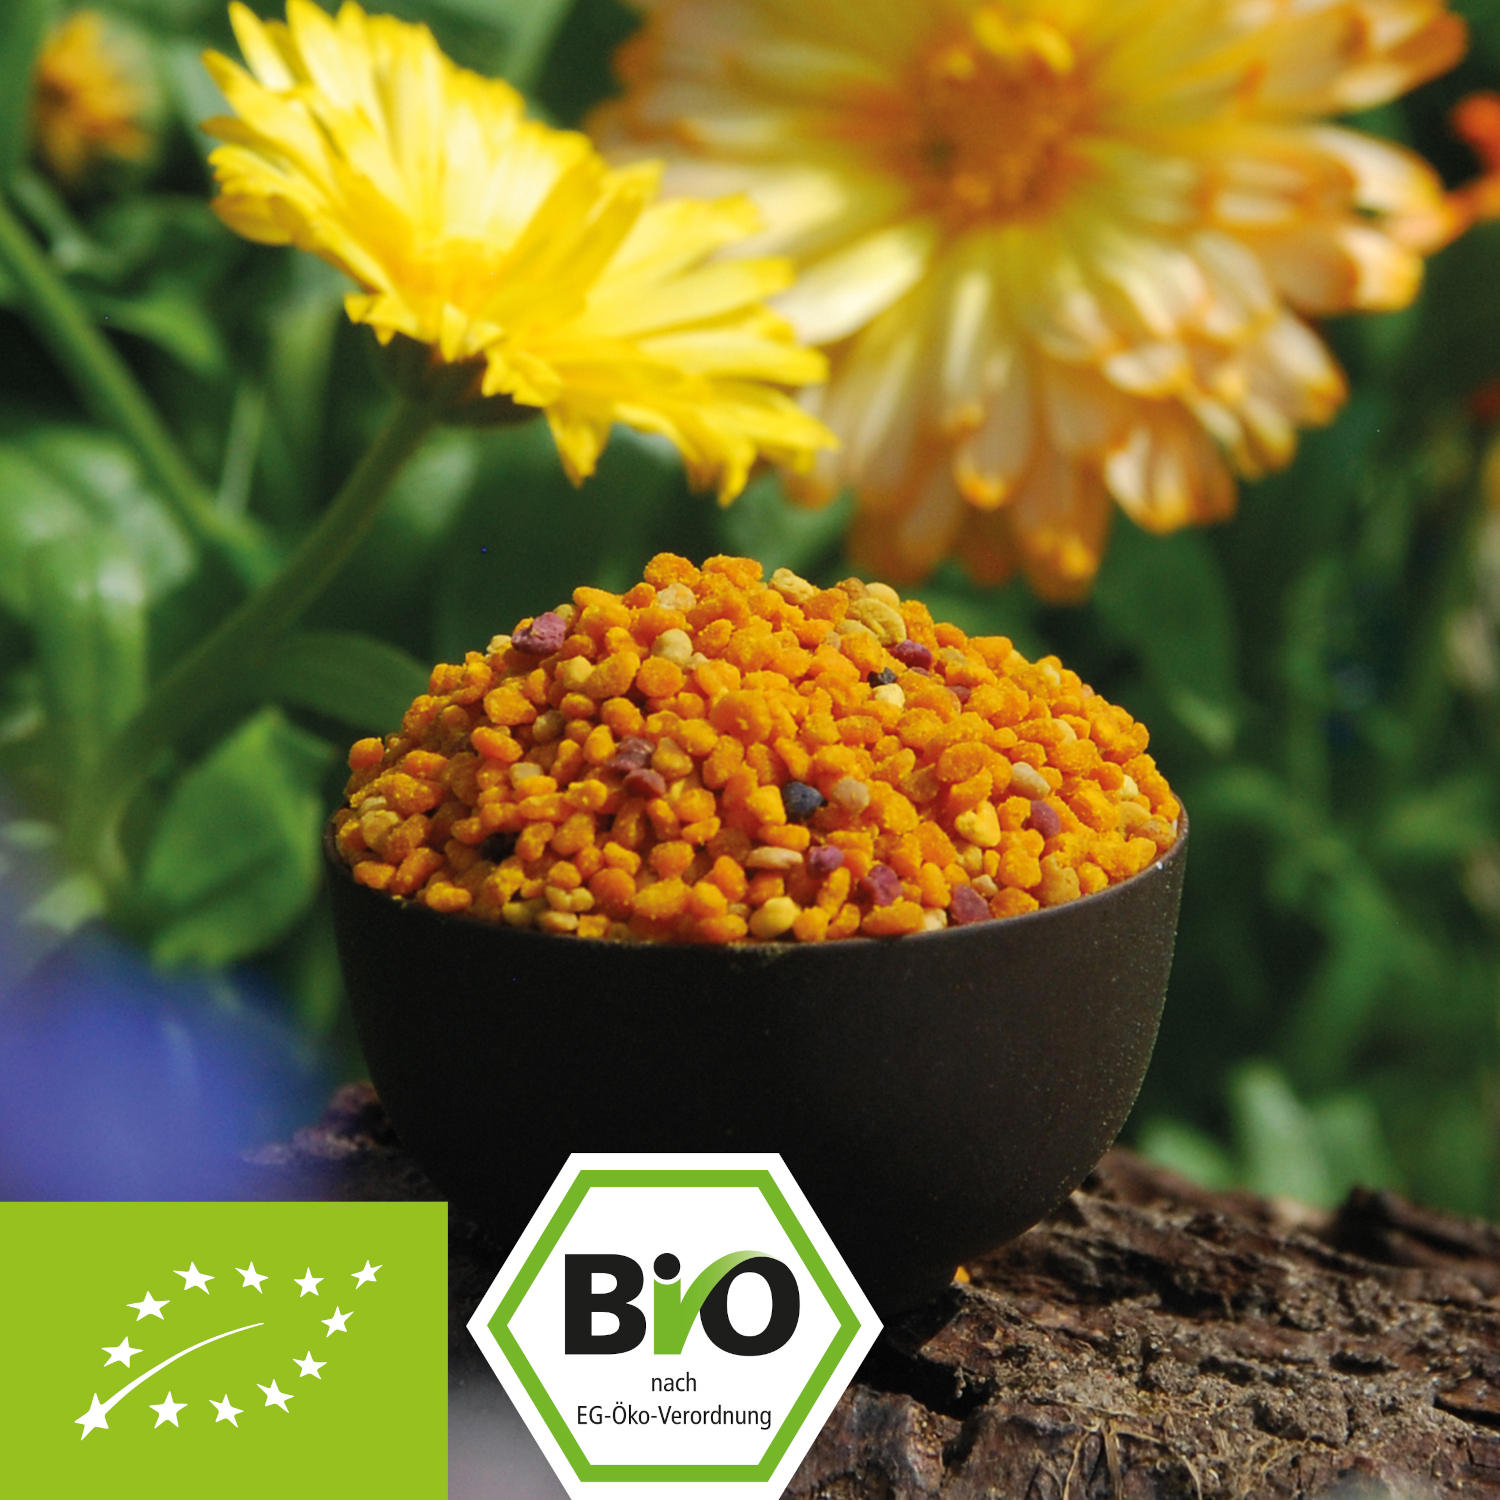 Pollen (Organic) buy online here - 1kg - 500g - 250g